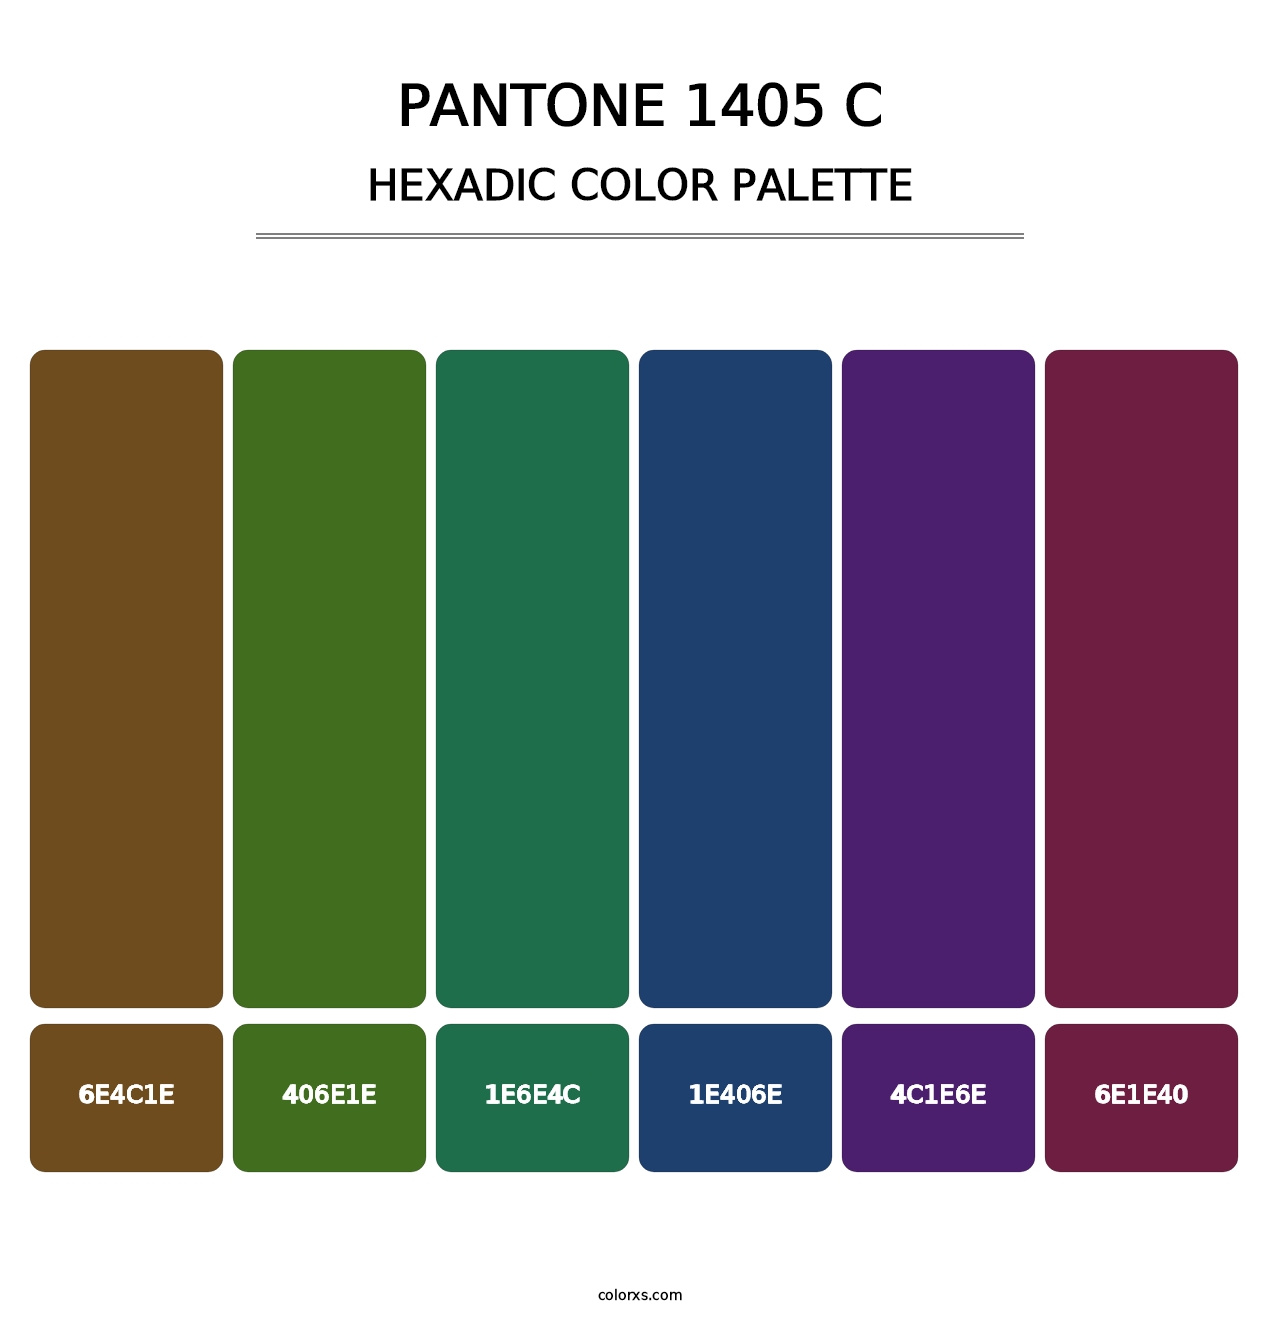 PANTONE 1405 C - Hexadic Color Palette